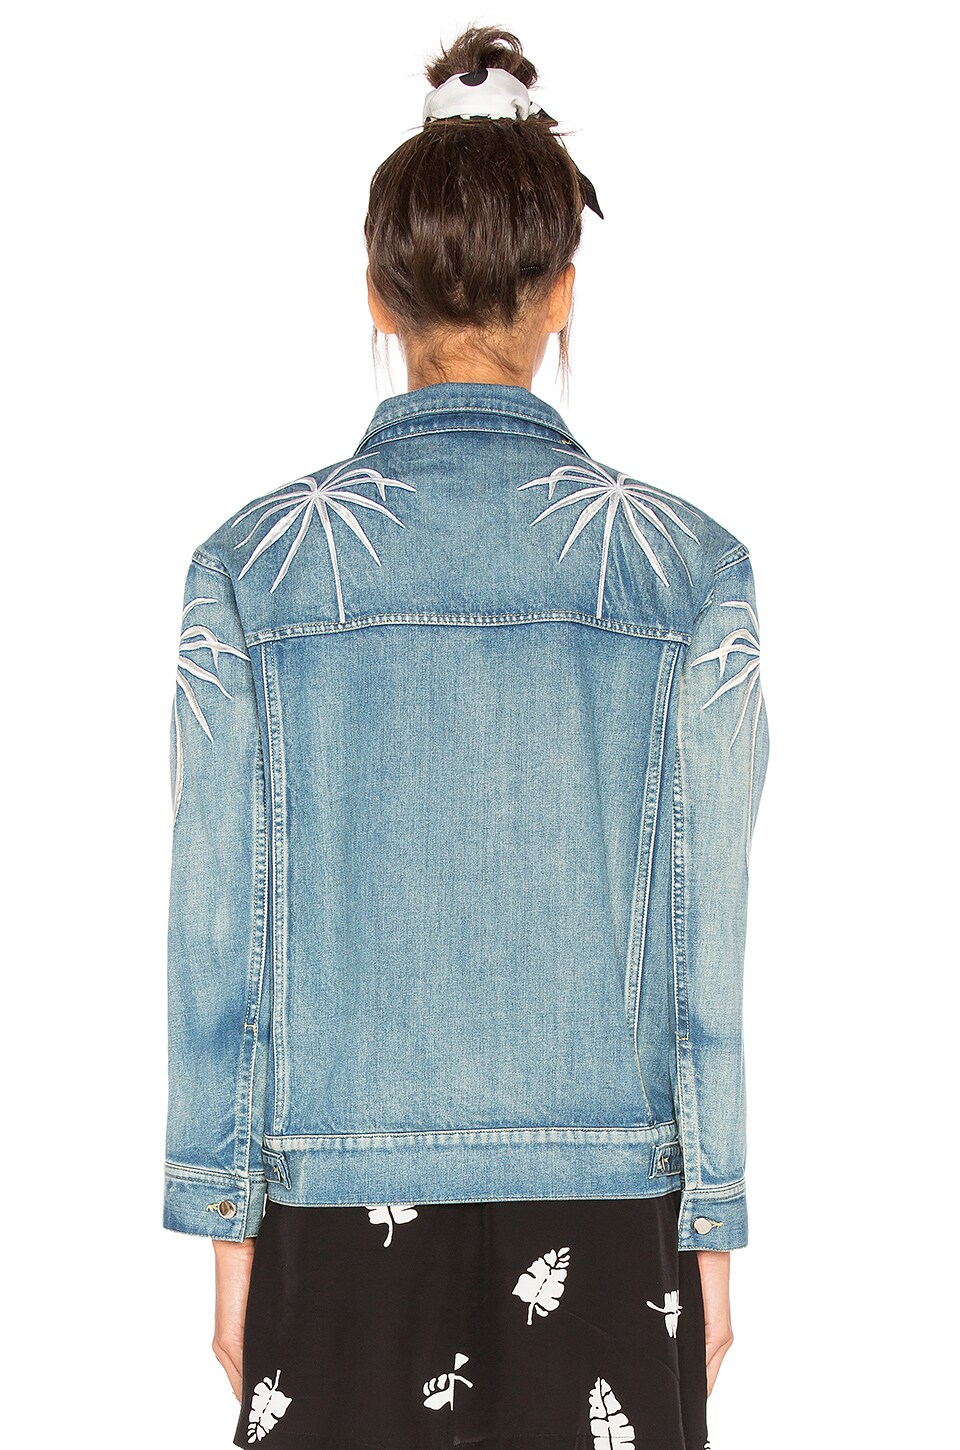 CAPULET Palma Embroidered Denim Jacket in Washed Denim | ModeSens